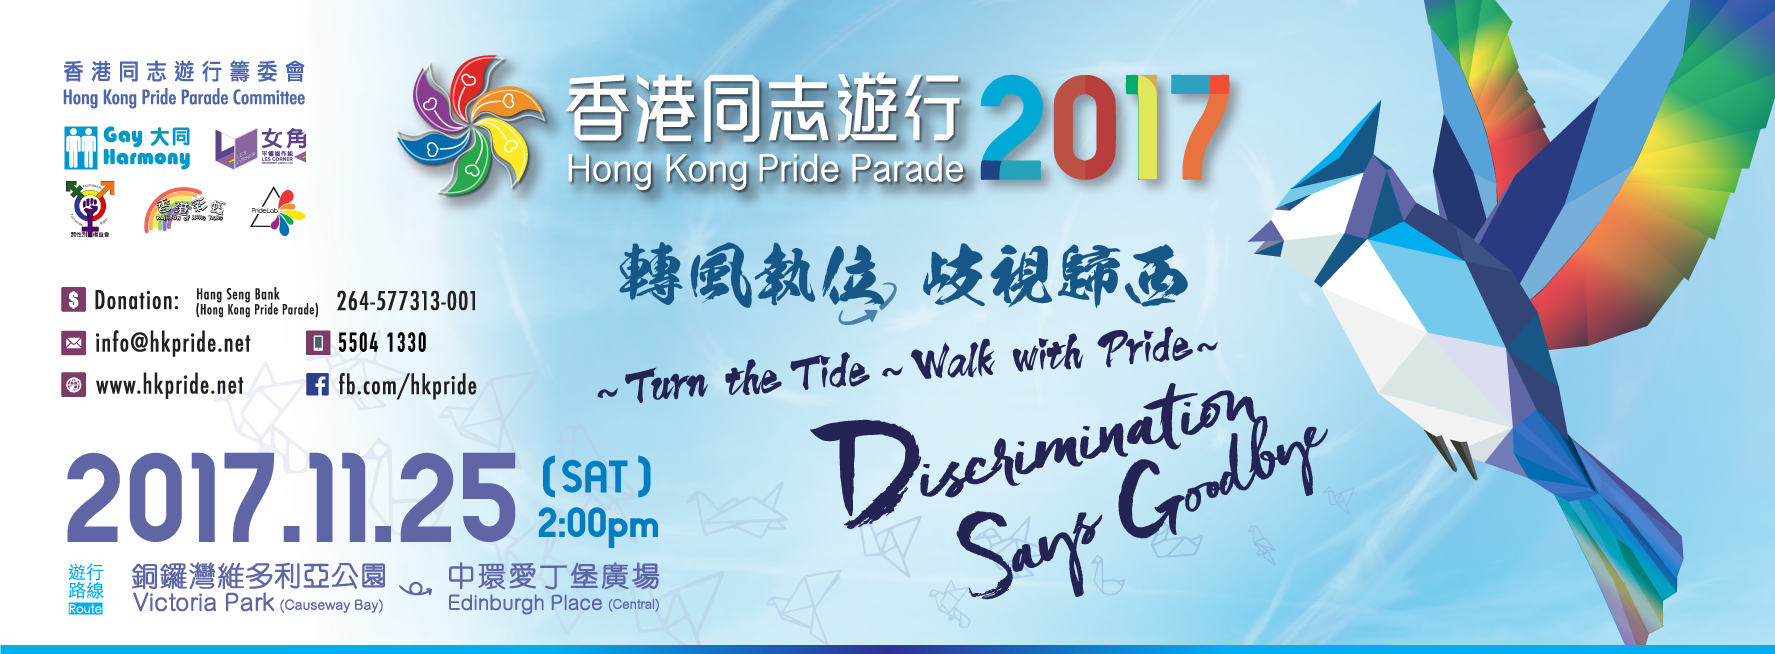 E-banner of Hong Kong Pride Parade 2017